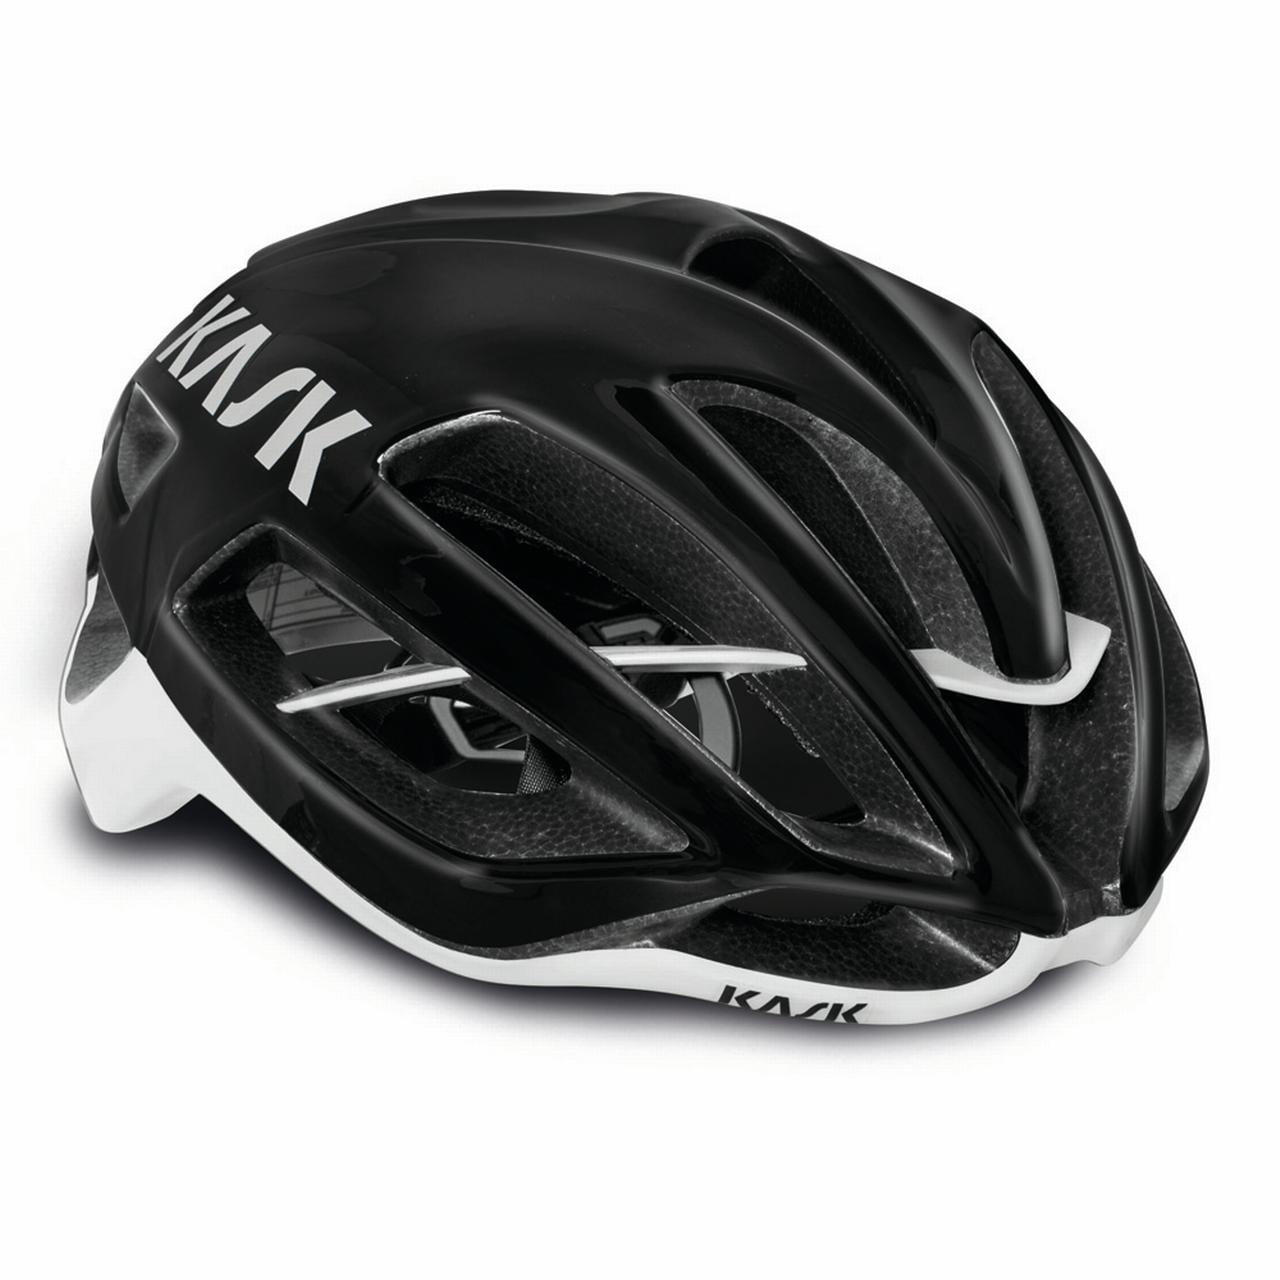 Kask Protone Helmet Black White Medium 52-58cm Road Bike